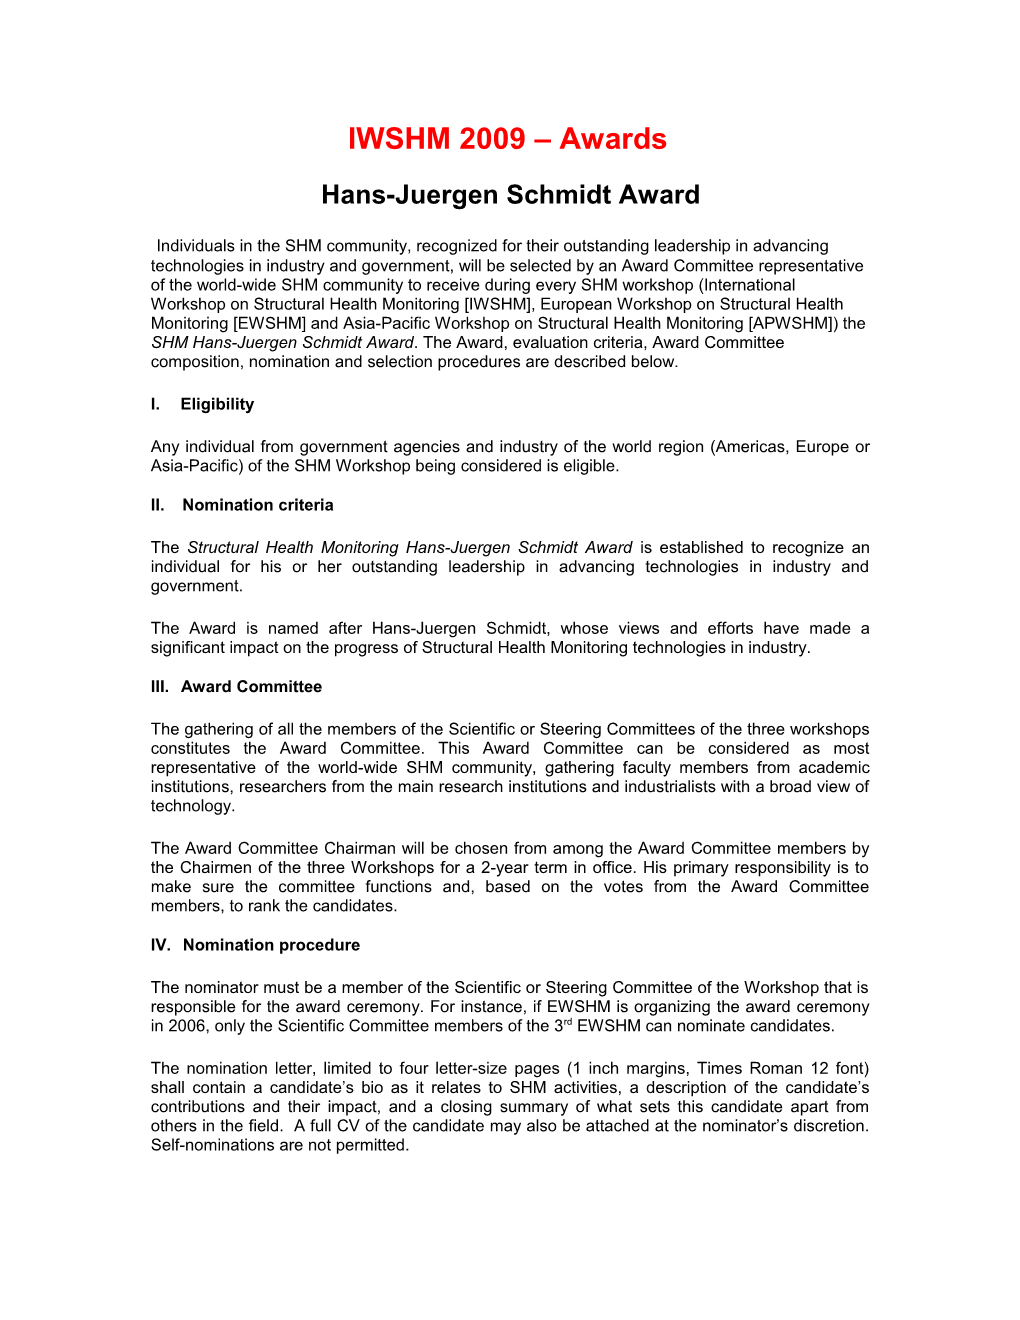 Hans-Juergen Schmidt Award